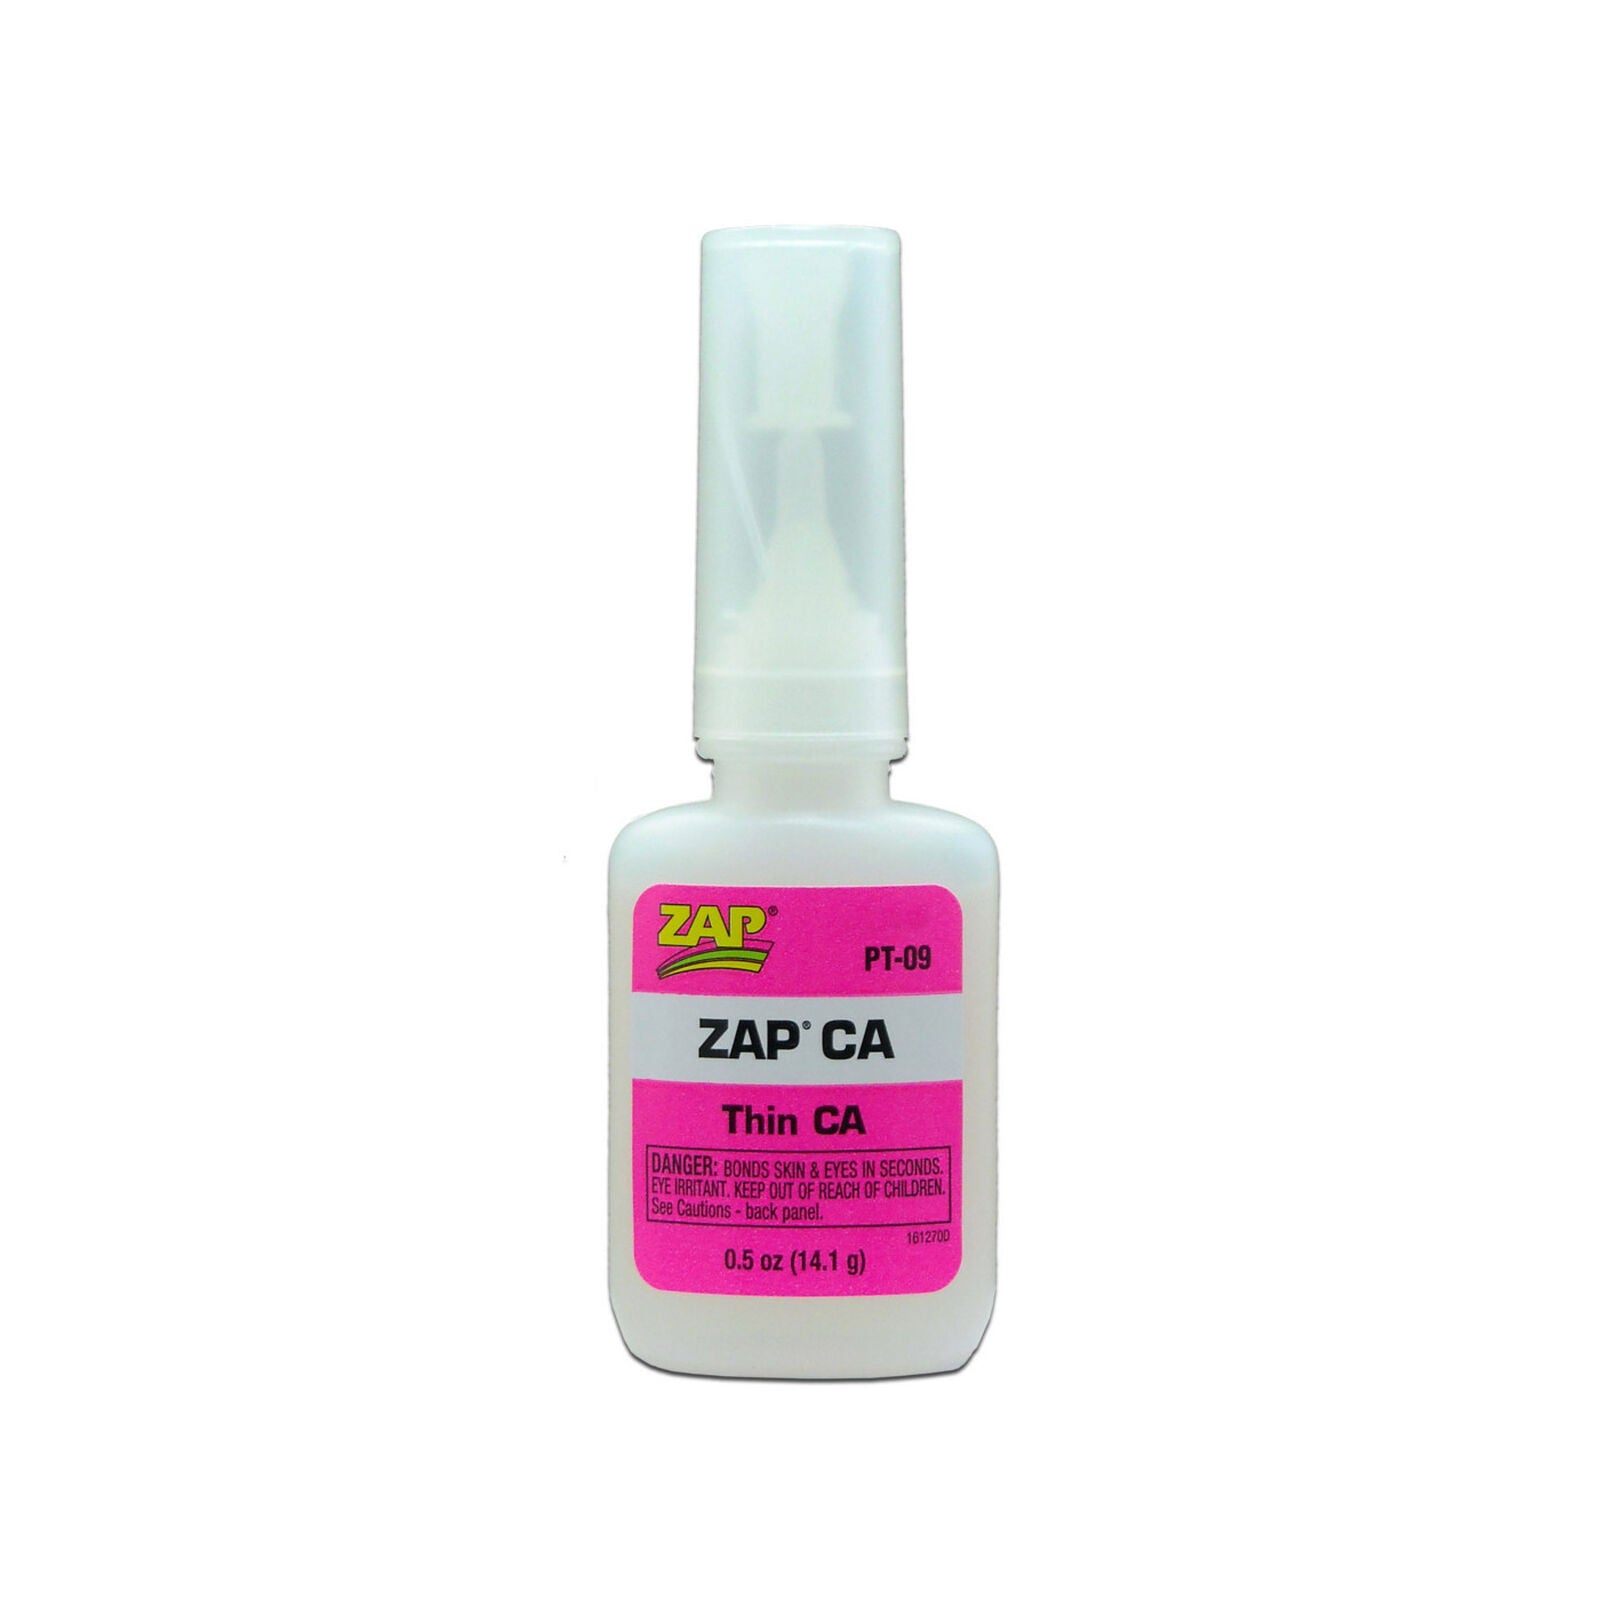 ZAP PT-09 Zap Thin CA Glue, 1/2 oz